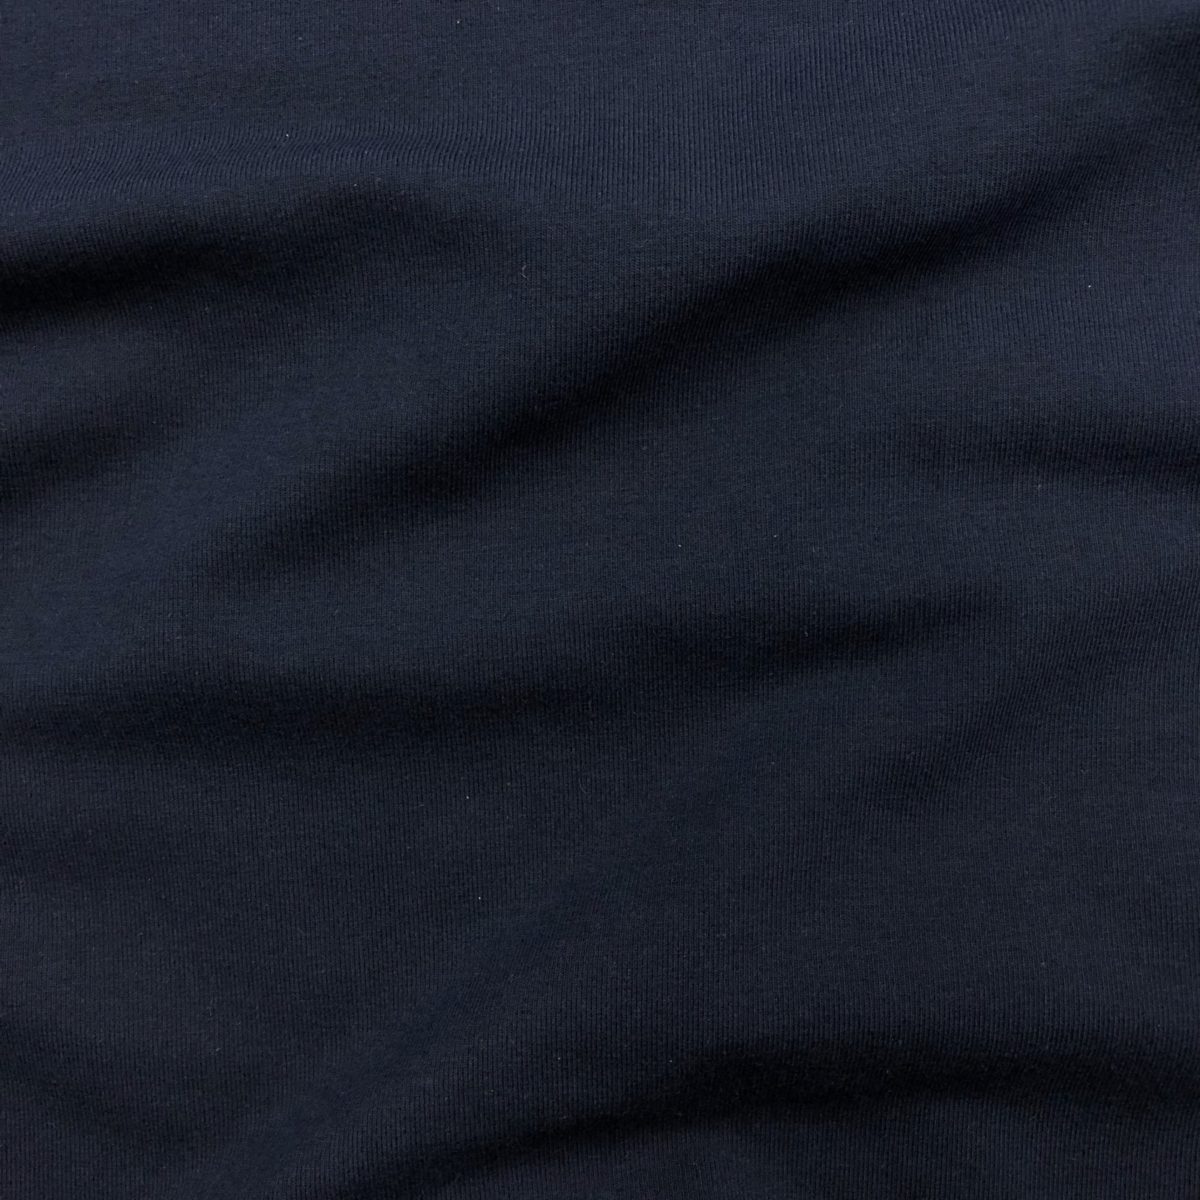 Yoga Cloth - Cotton/Spandex Knit - Navy - Stonemountain & Daughter Fabrics